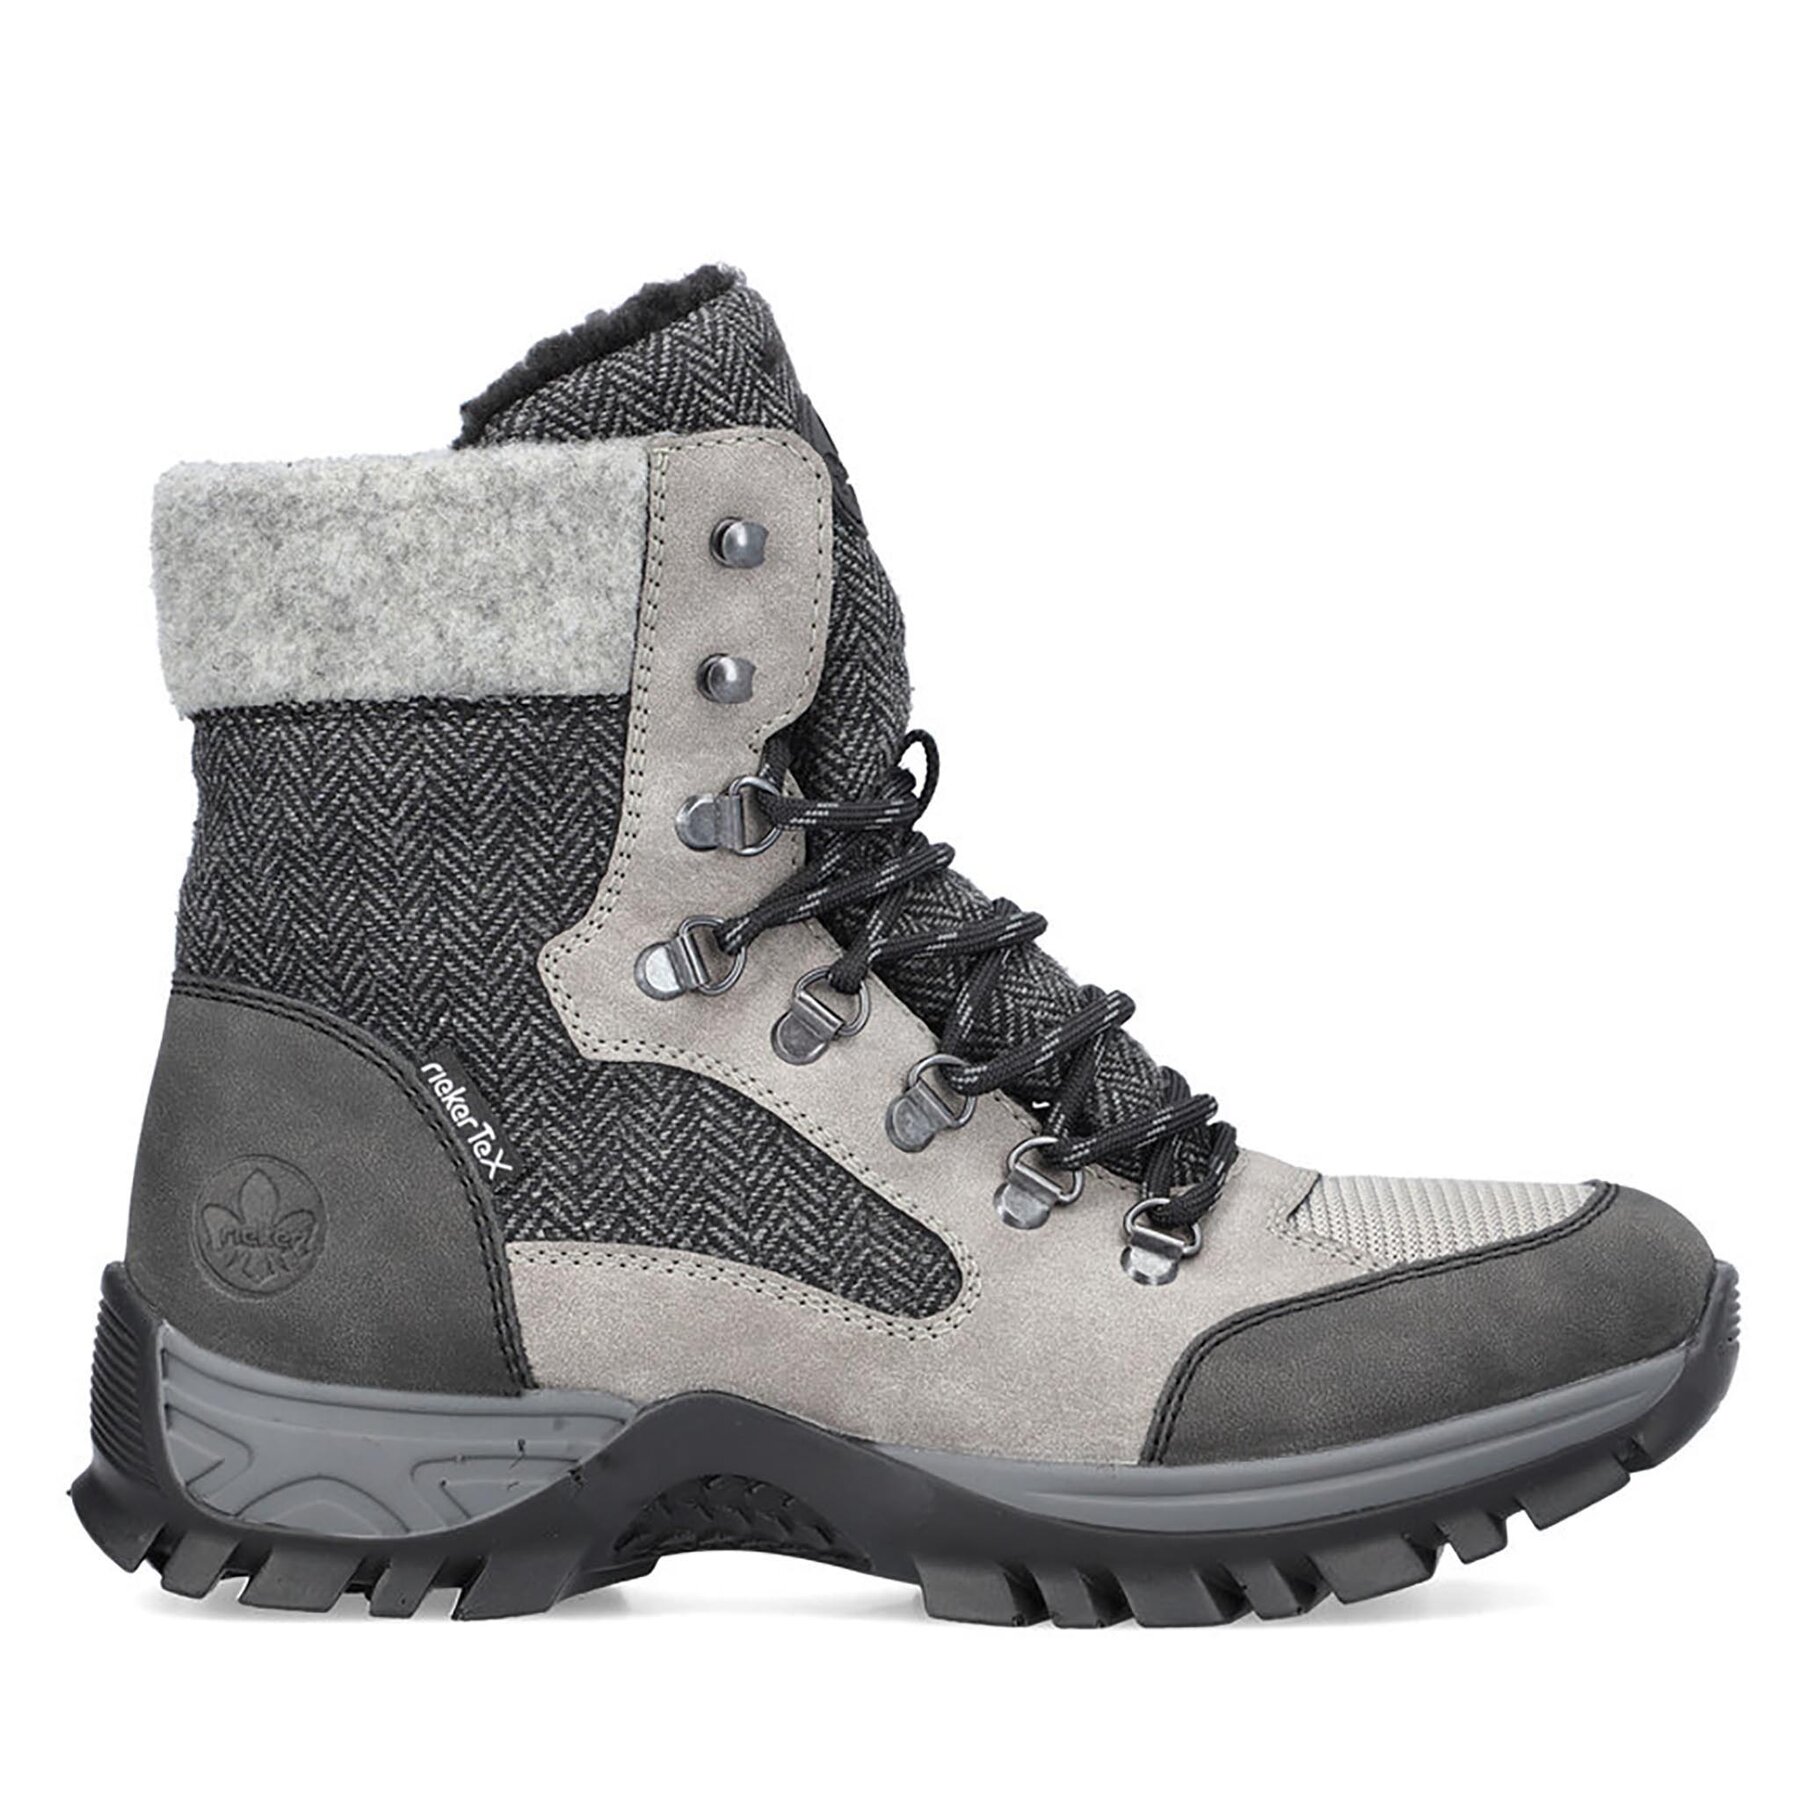 Comprar en oferta Rieker Boots (M9842) anthracite/fog/grey